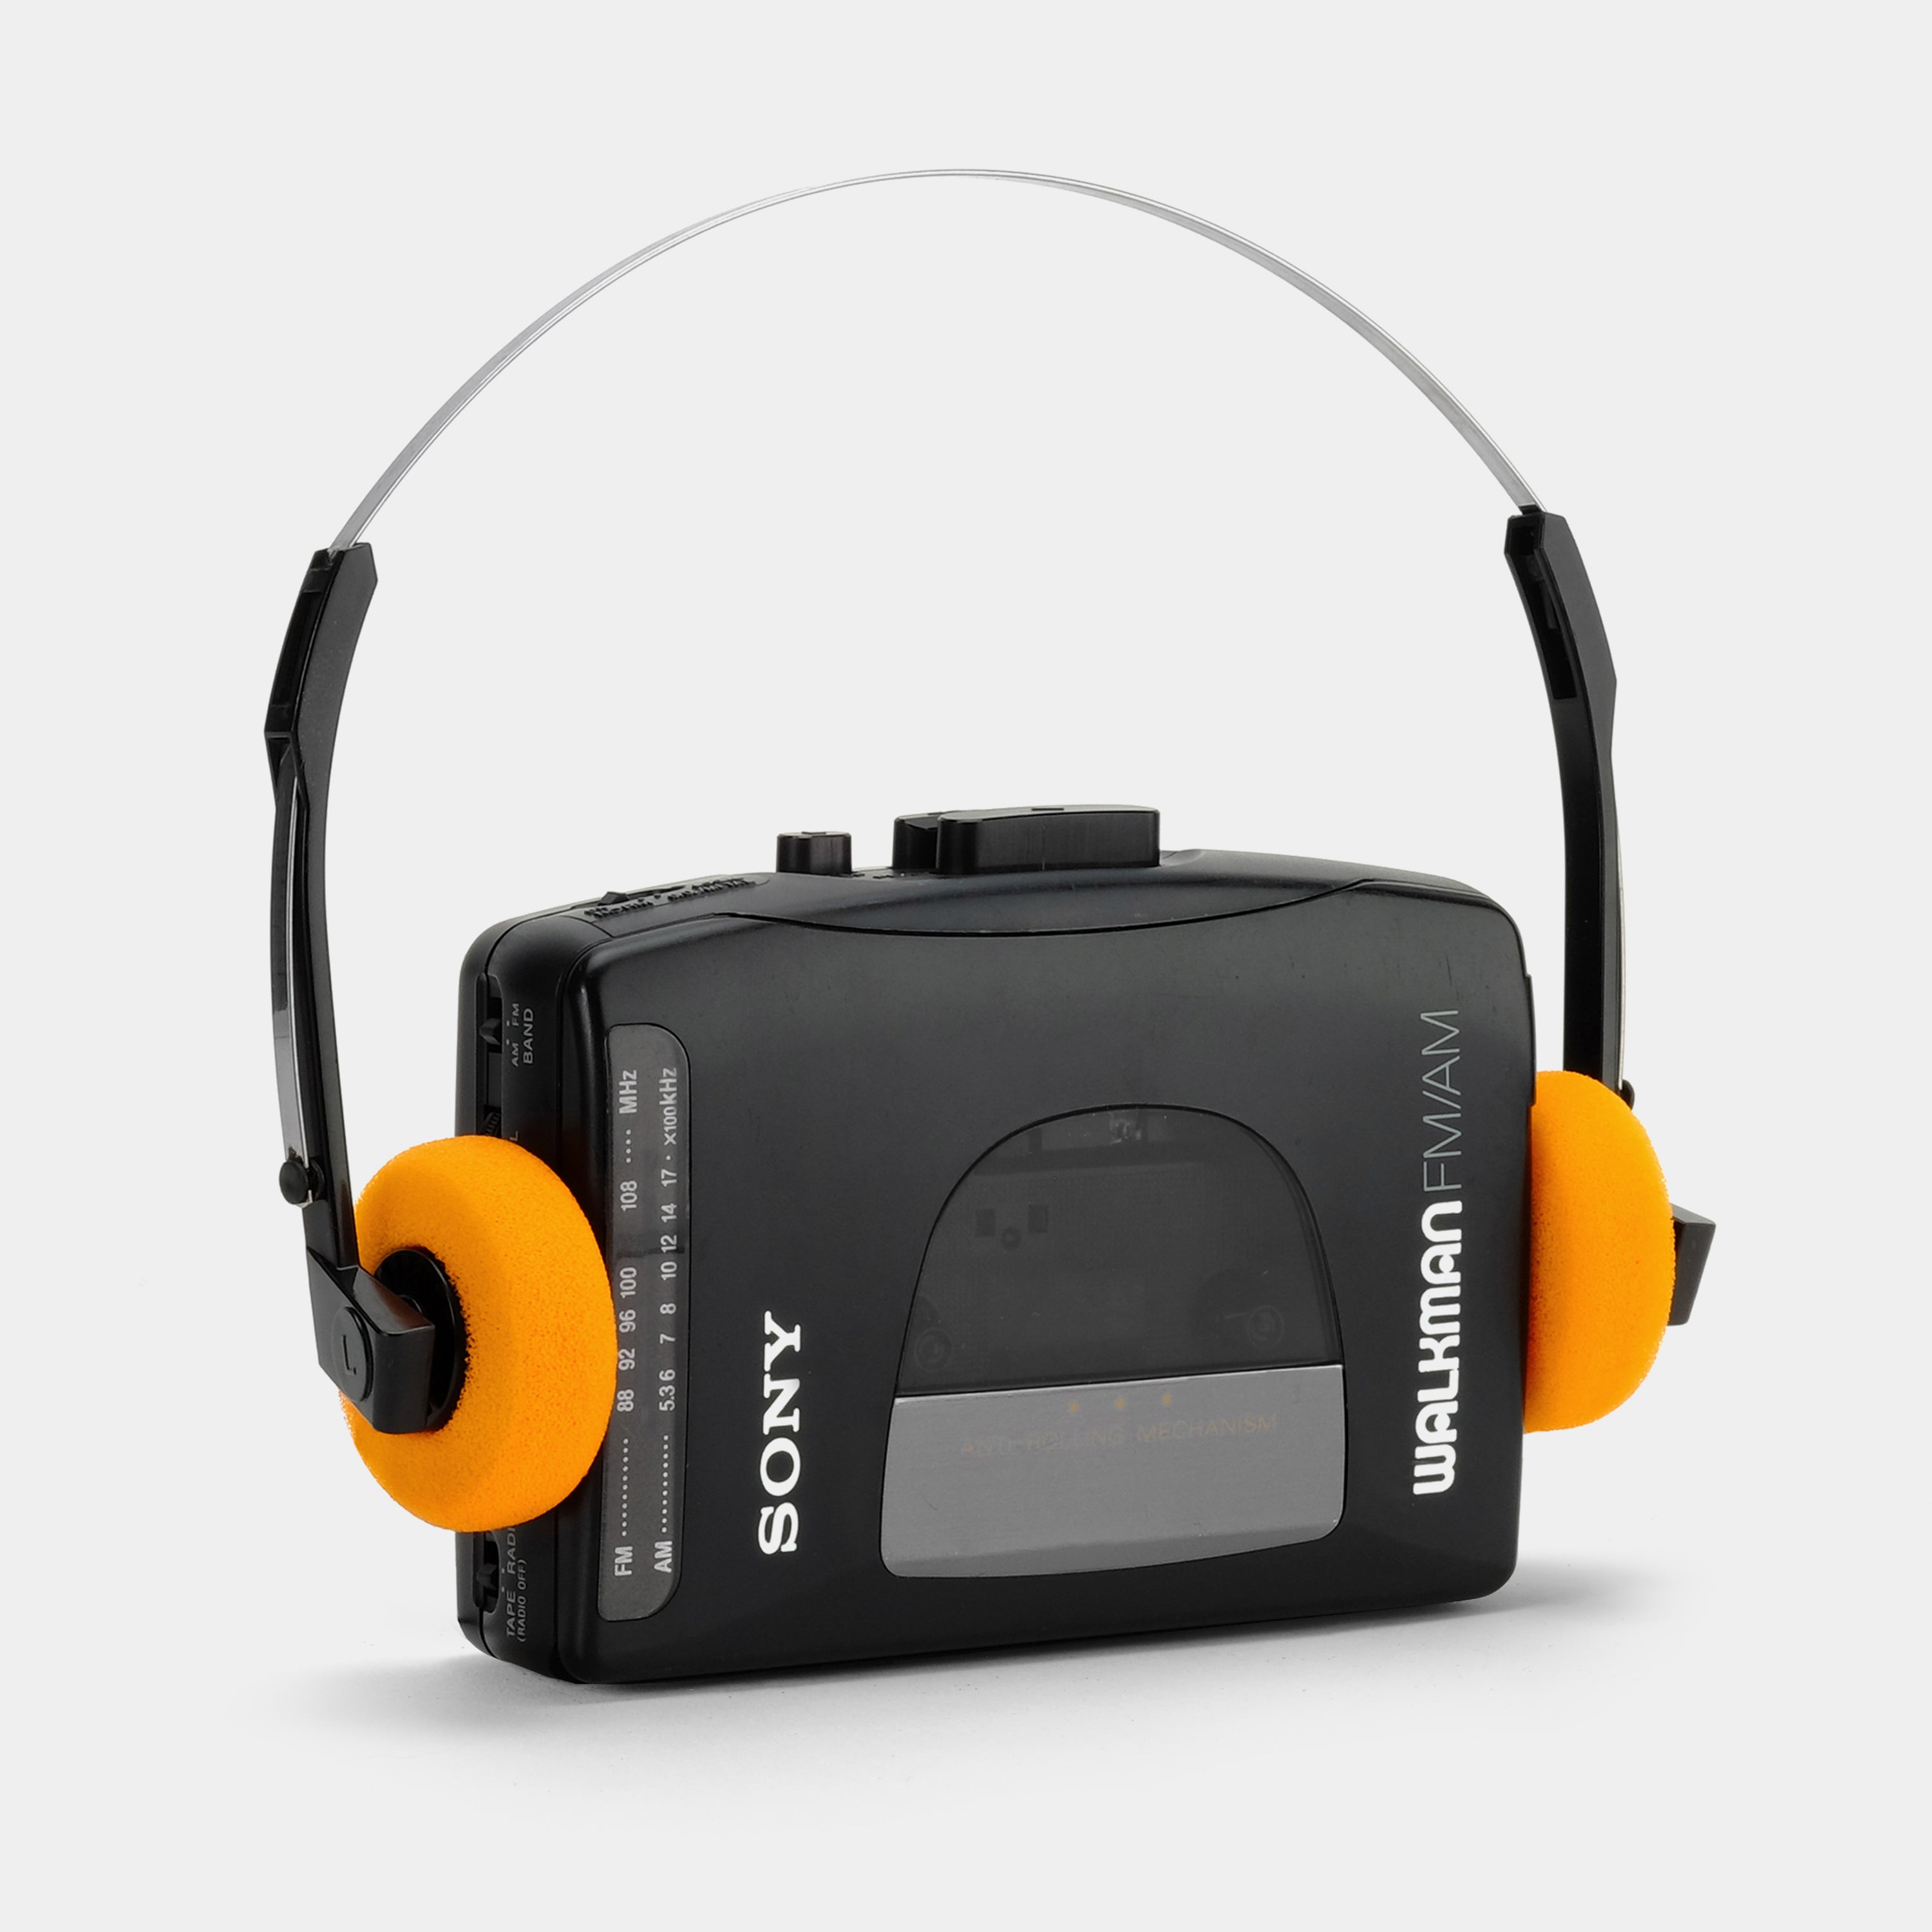 Sony Walkman WM-FX10 AM/FM Portable Cassette Player